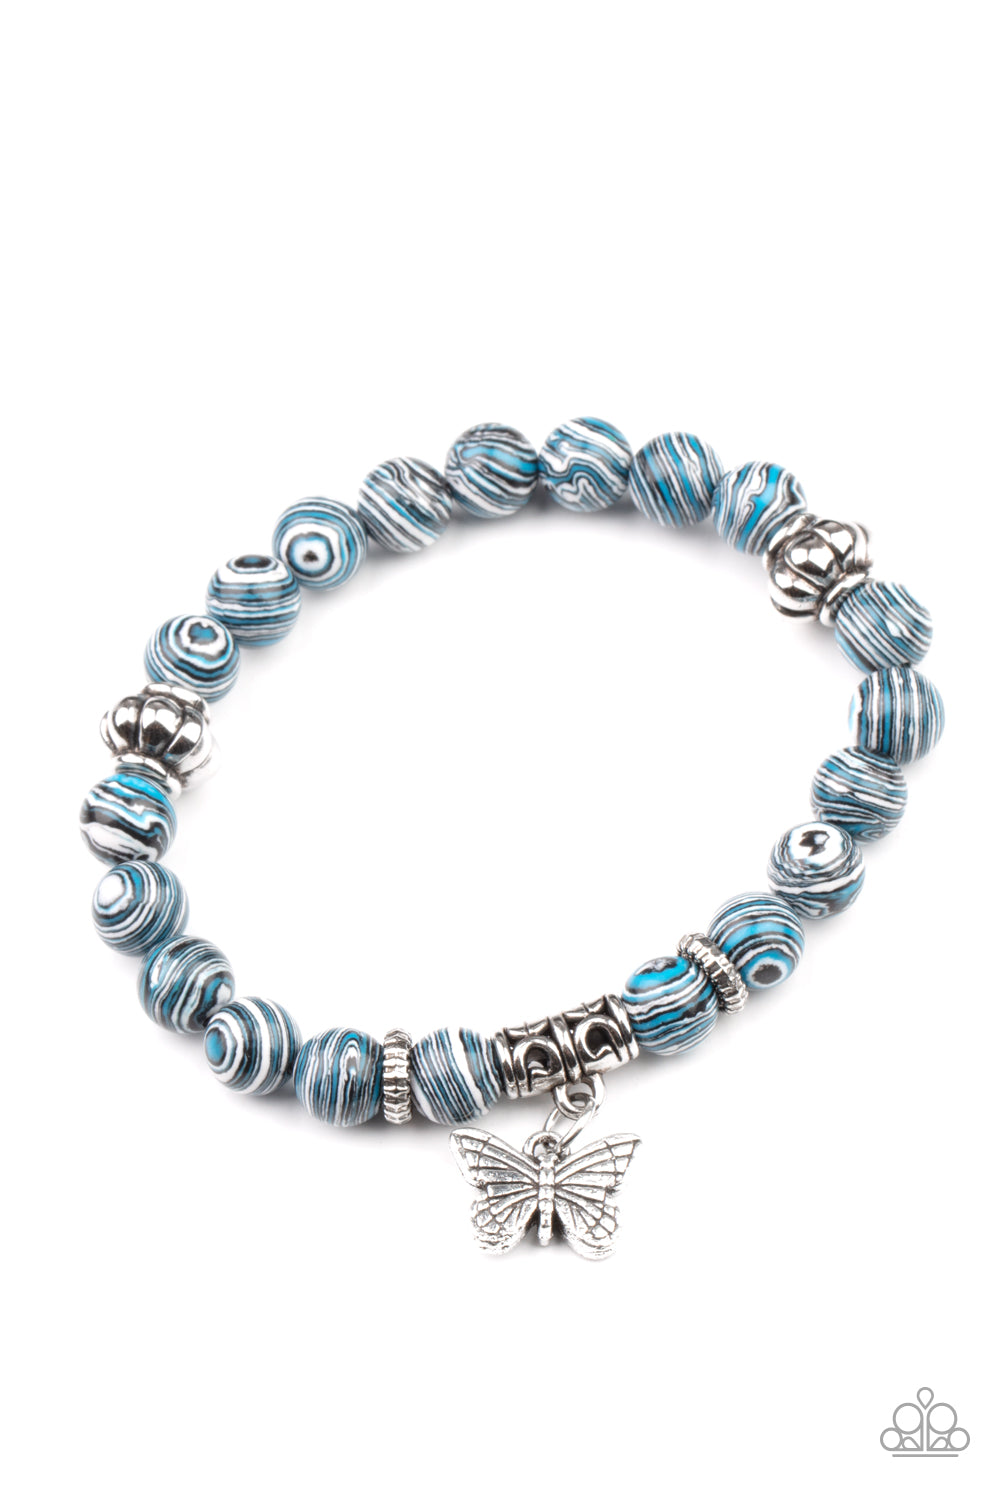 Paparazzi Butterfly Wishes - Blue Butterfly Bracelet